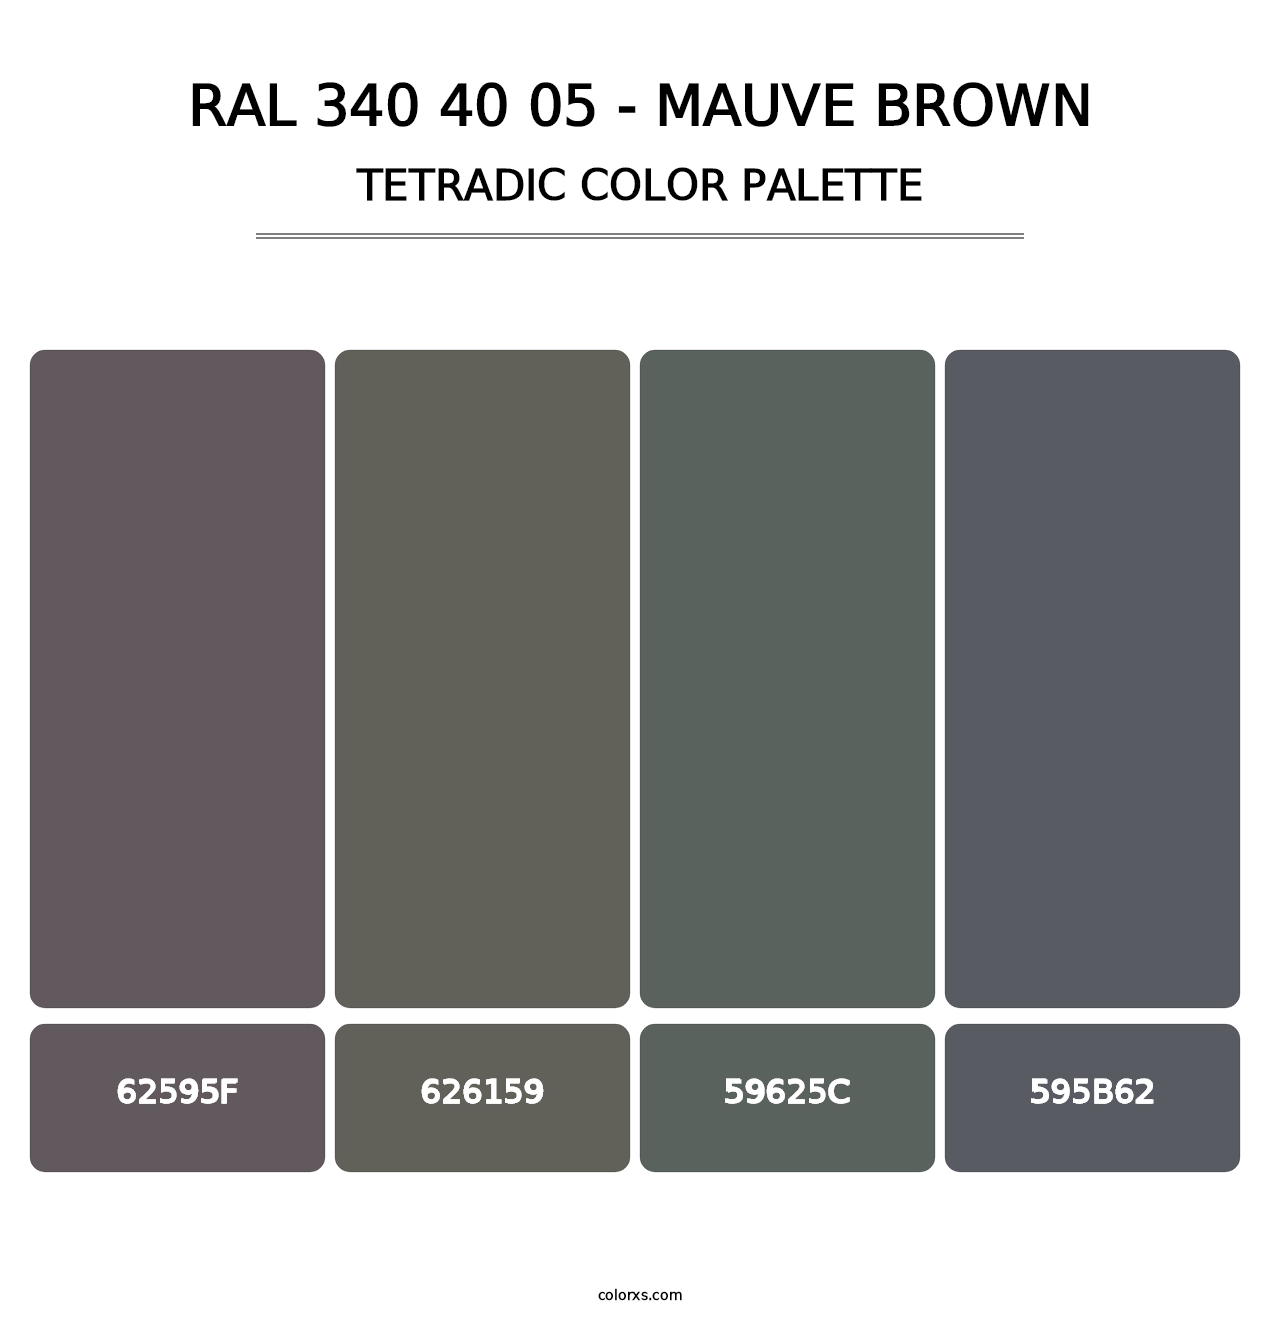 RAL 340 40 05 - Mauve Brown - Tetradic Color Palette